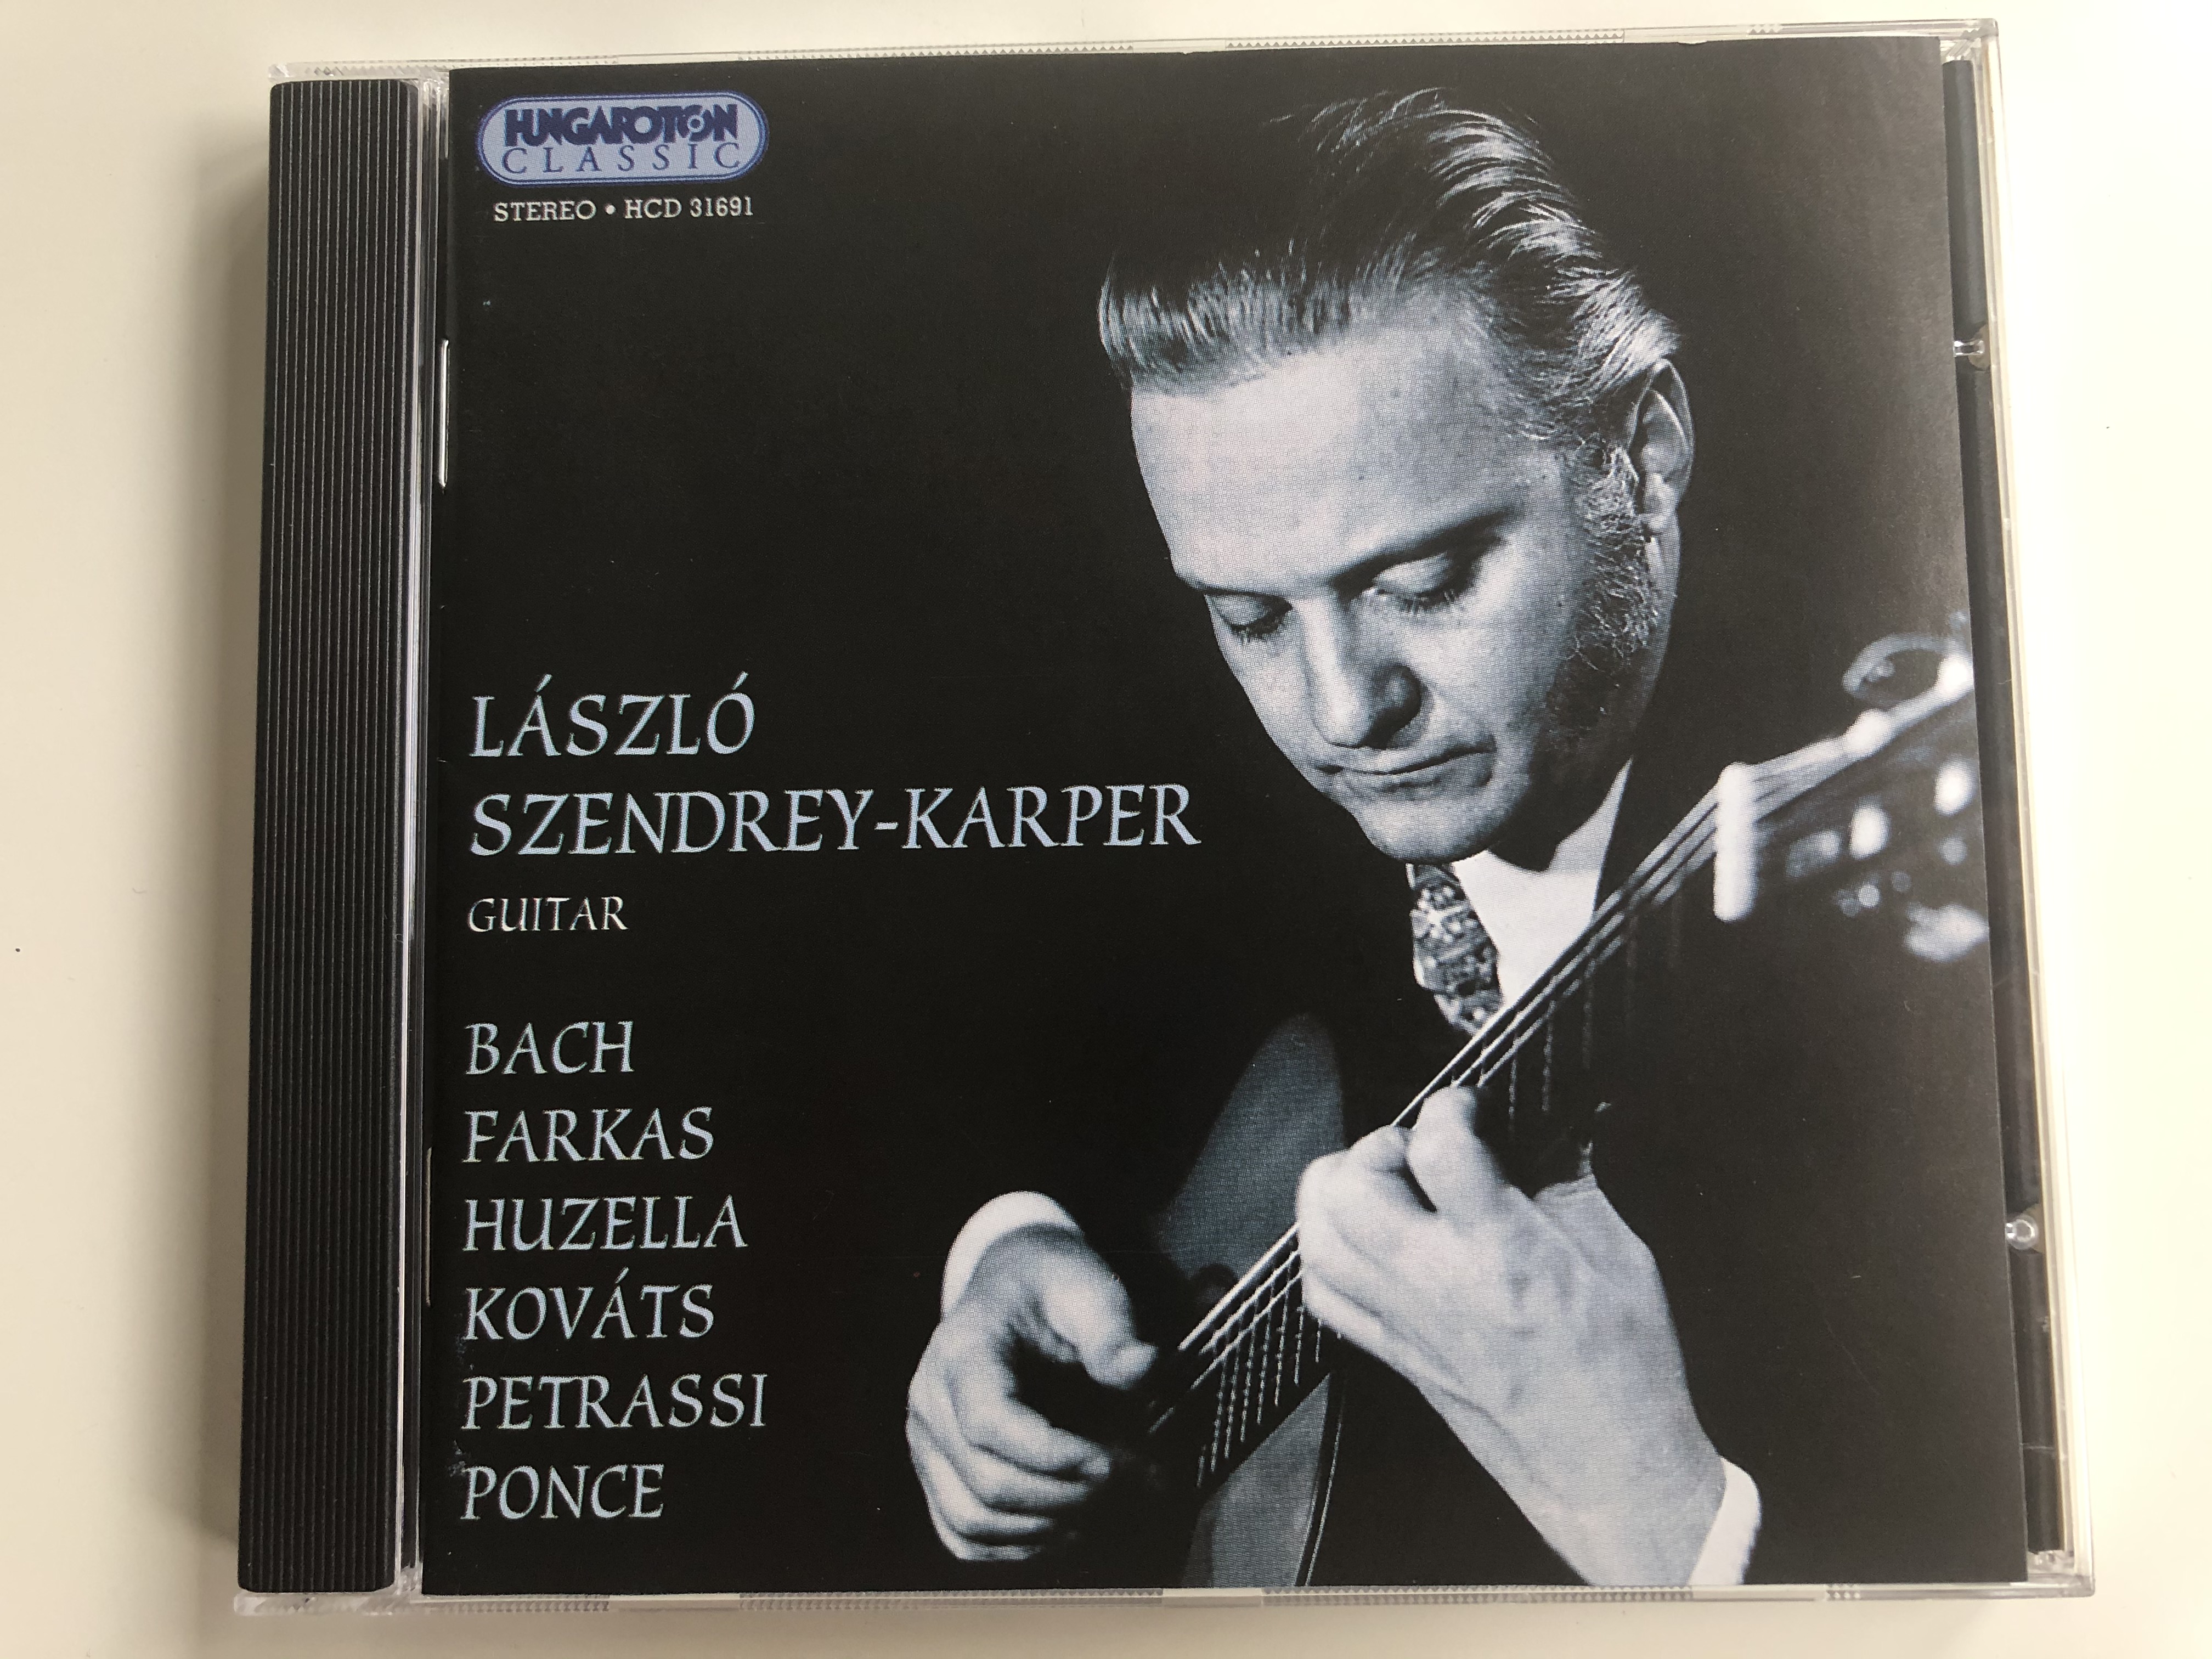 laszlo-szendrey-kaprer-guitar-bach-farkas-huzella-kovats-petrassi-ponce-hungaroton-classic-audio-cd-1997-stereo-hcd-31691-1-.jpg